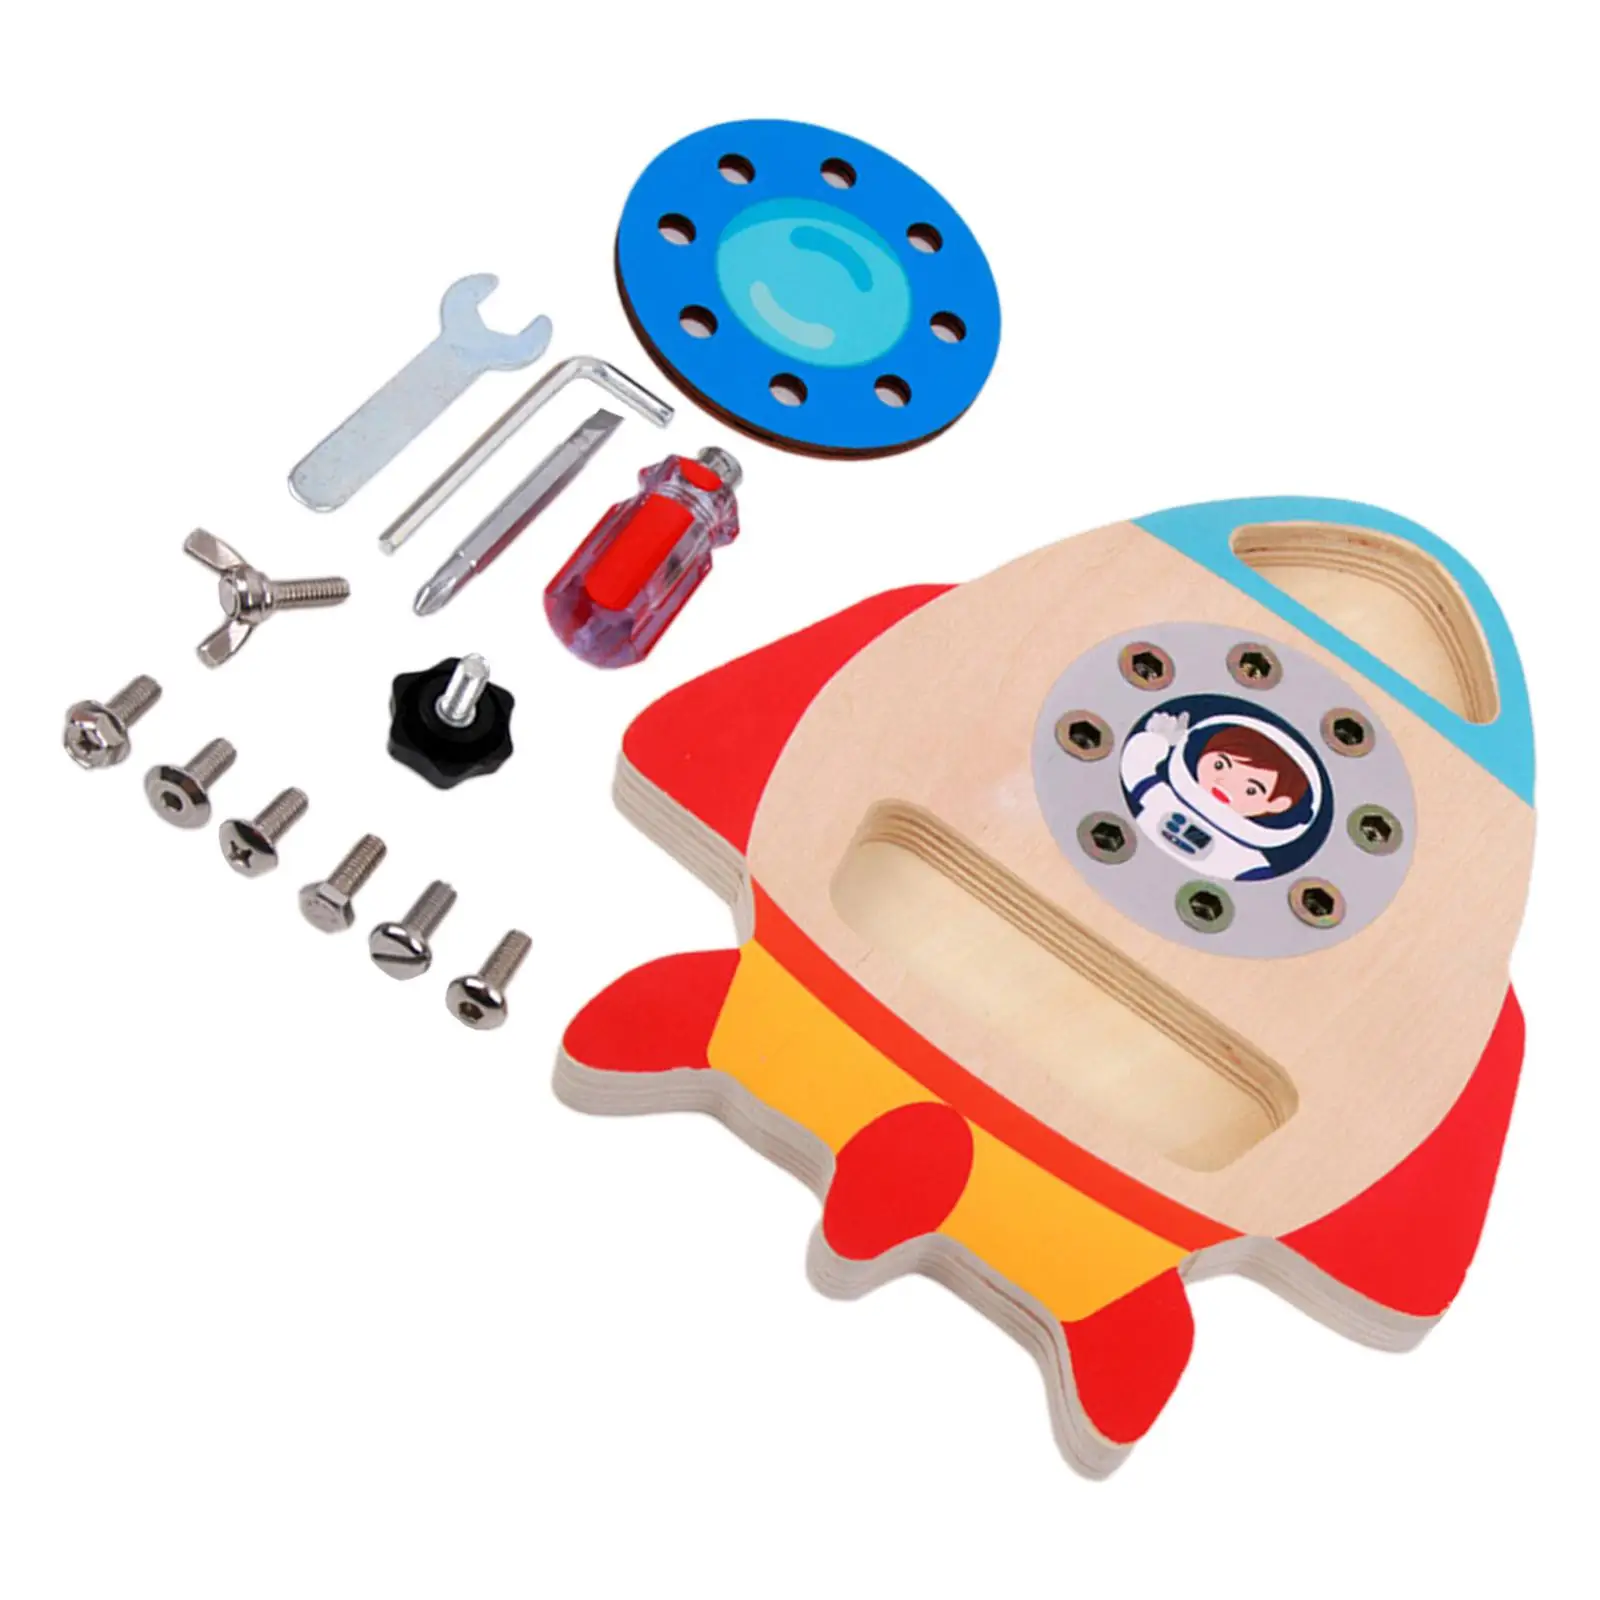 Montessori Screwdriver Board Set Toy Wooden Screwdriver Activities Tools for Boy Children Toddlers